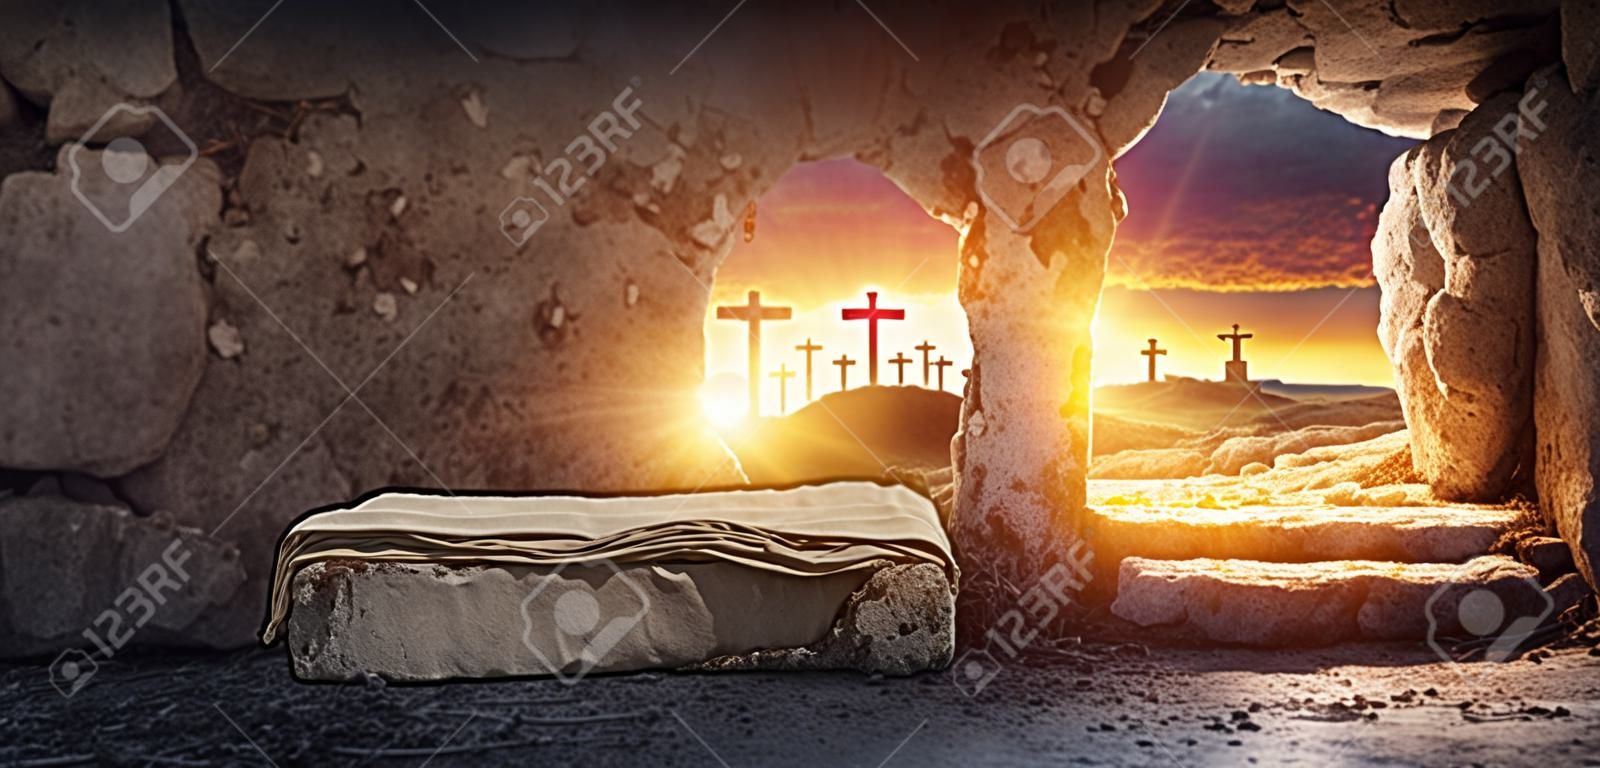 Graf Leeg met Shroud en kruisiging bij zonsopgang Opstanding van Jezus Christus